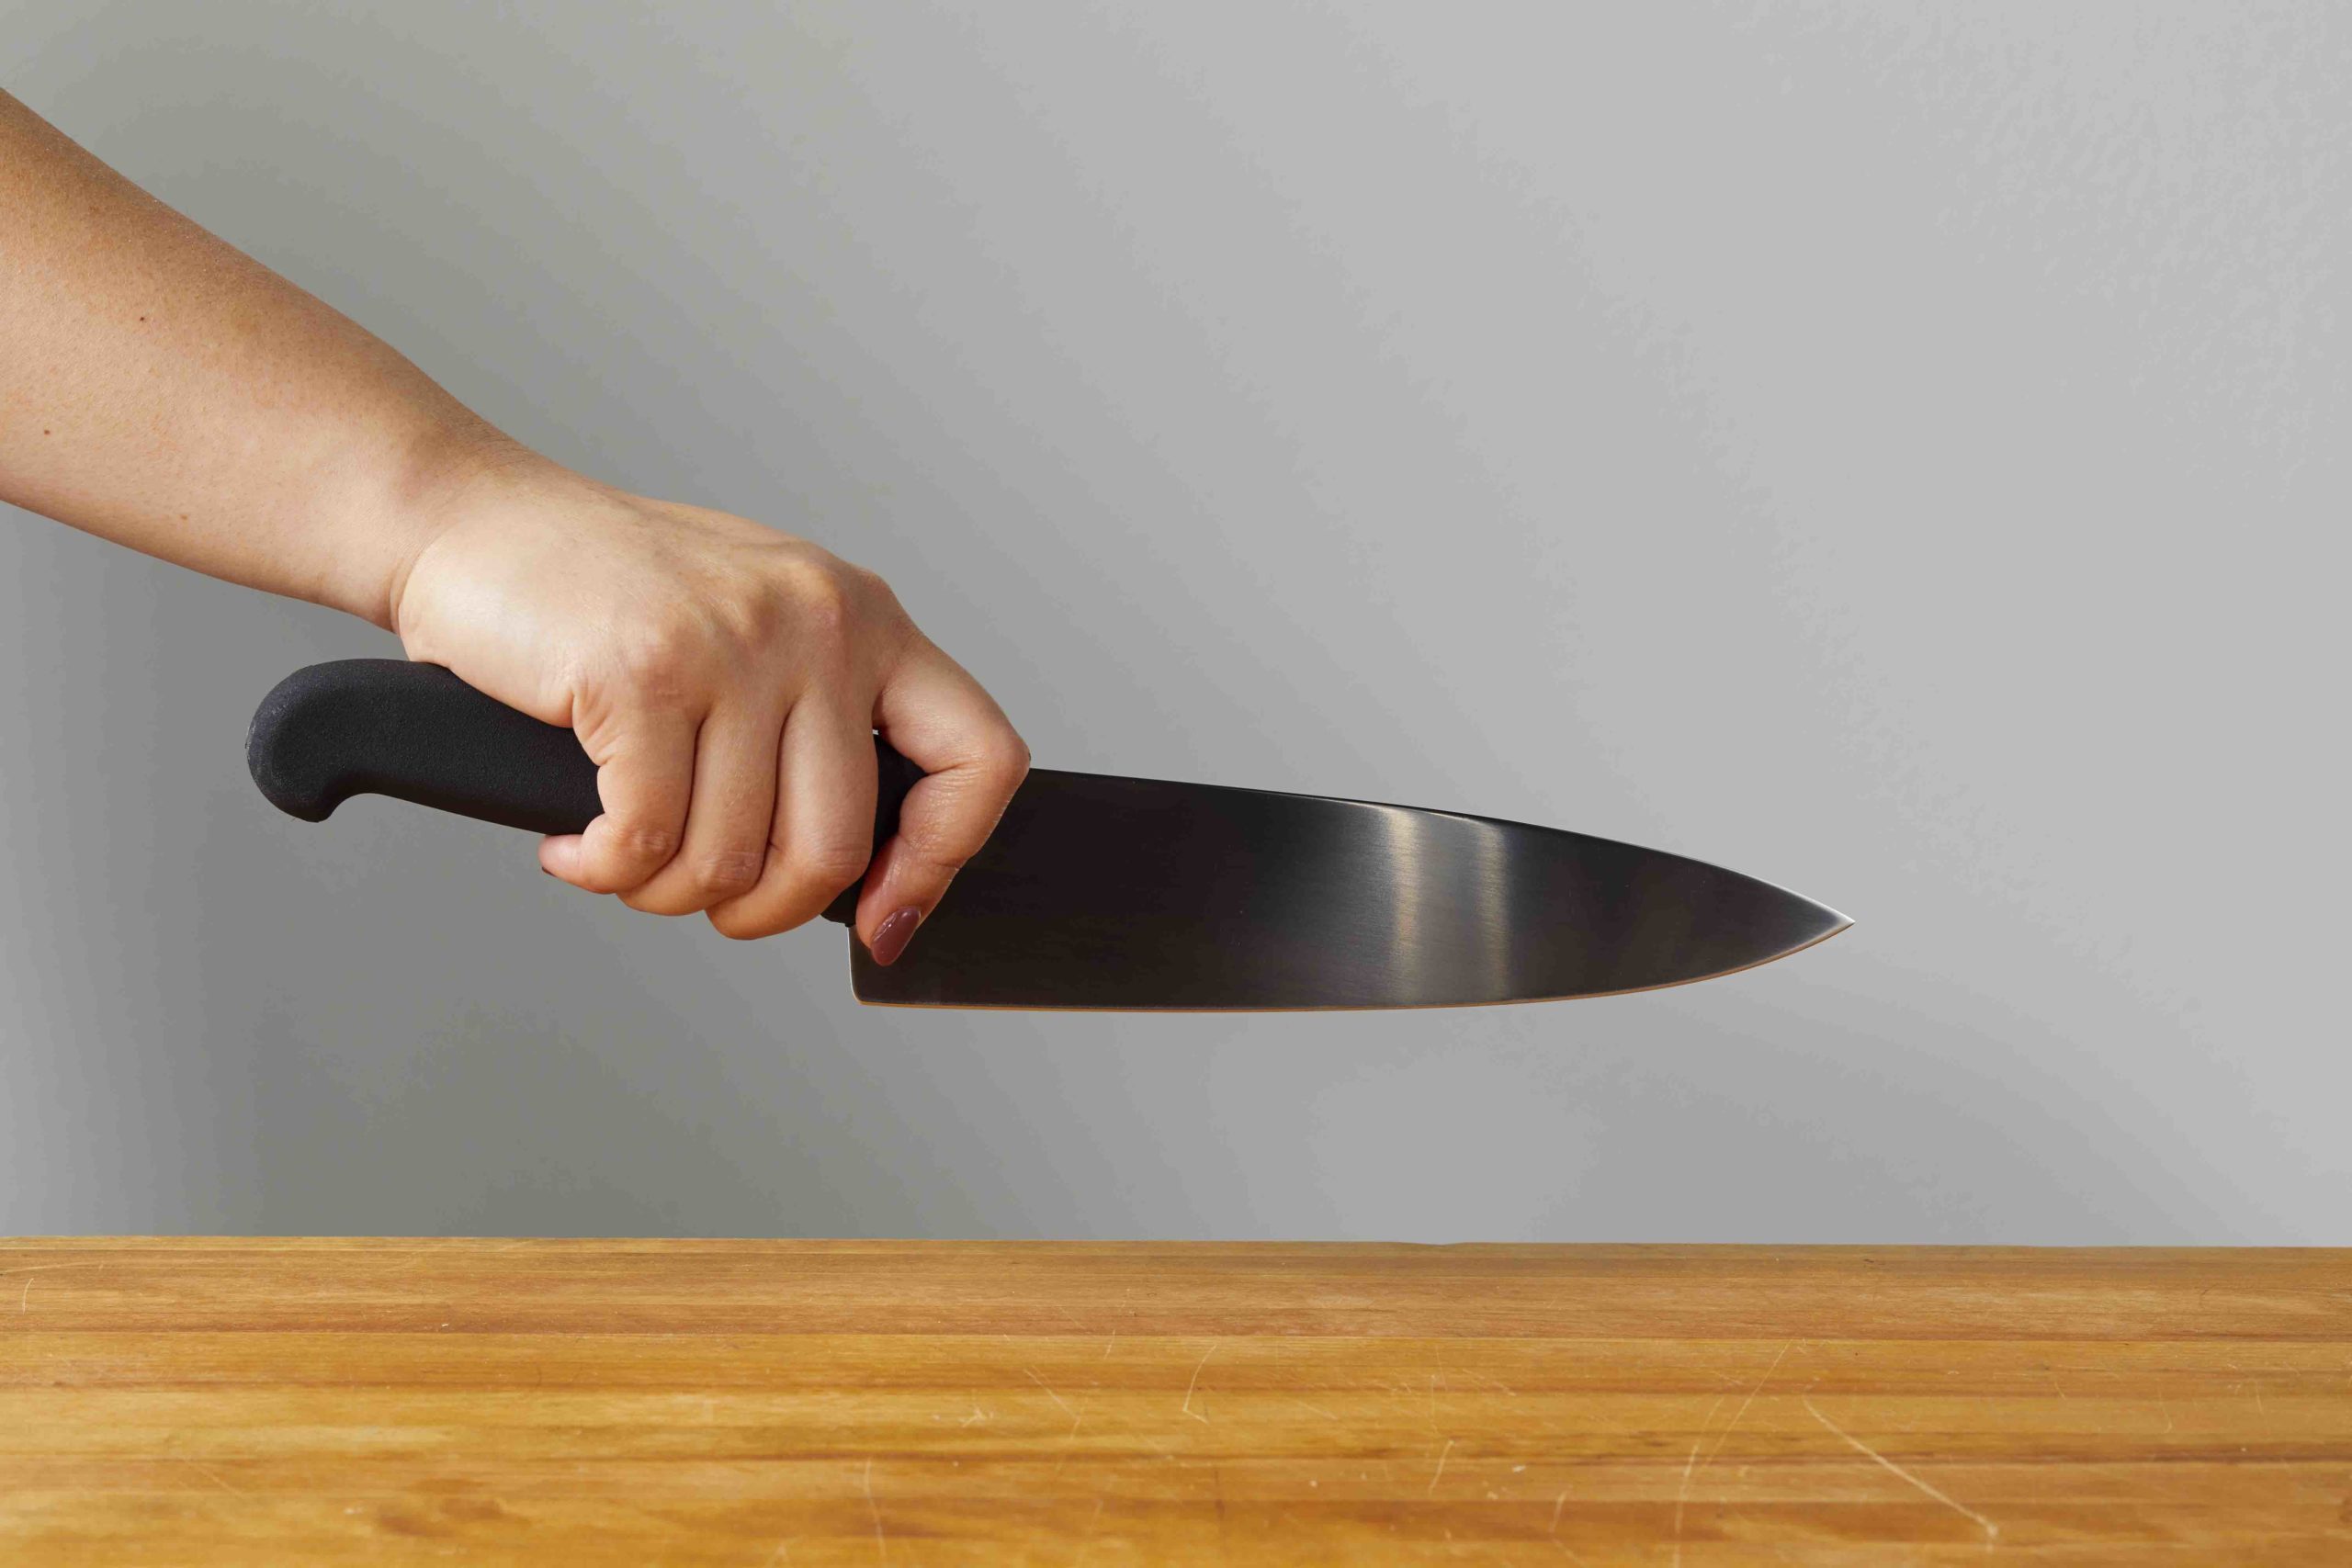 Rondelle Cut + Other Basic Knife Skills - We Eat At Last